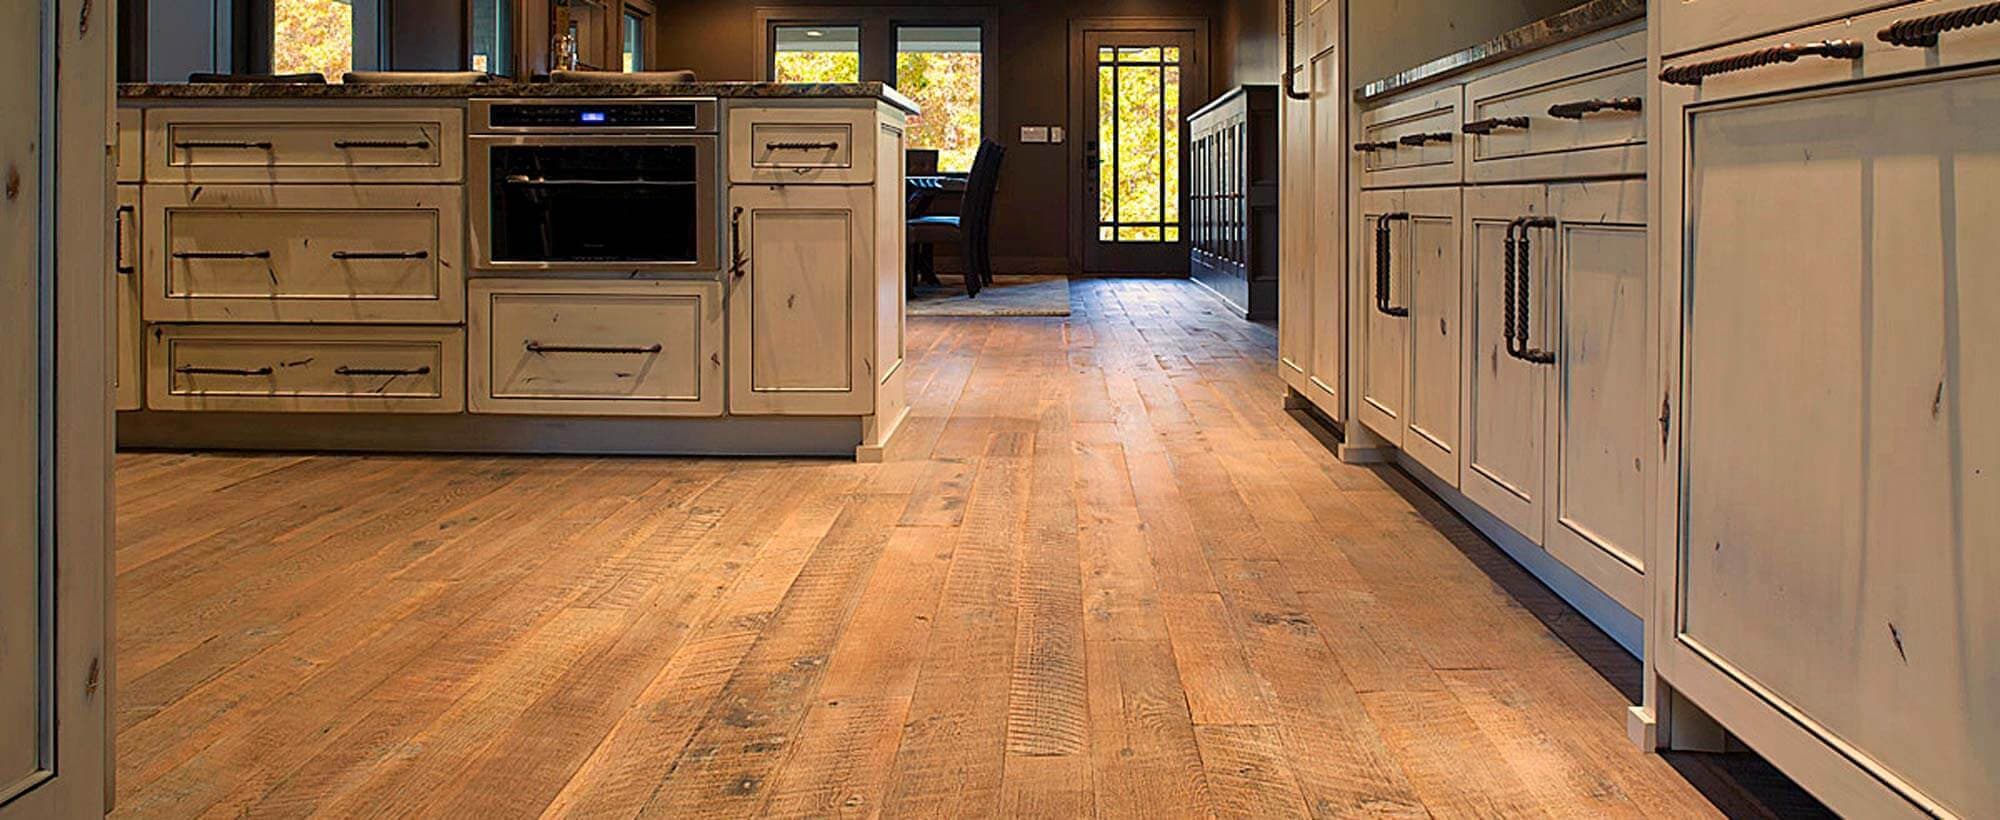 Reclaimed oak flooring in Candler North Carolina kitchen.